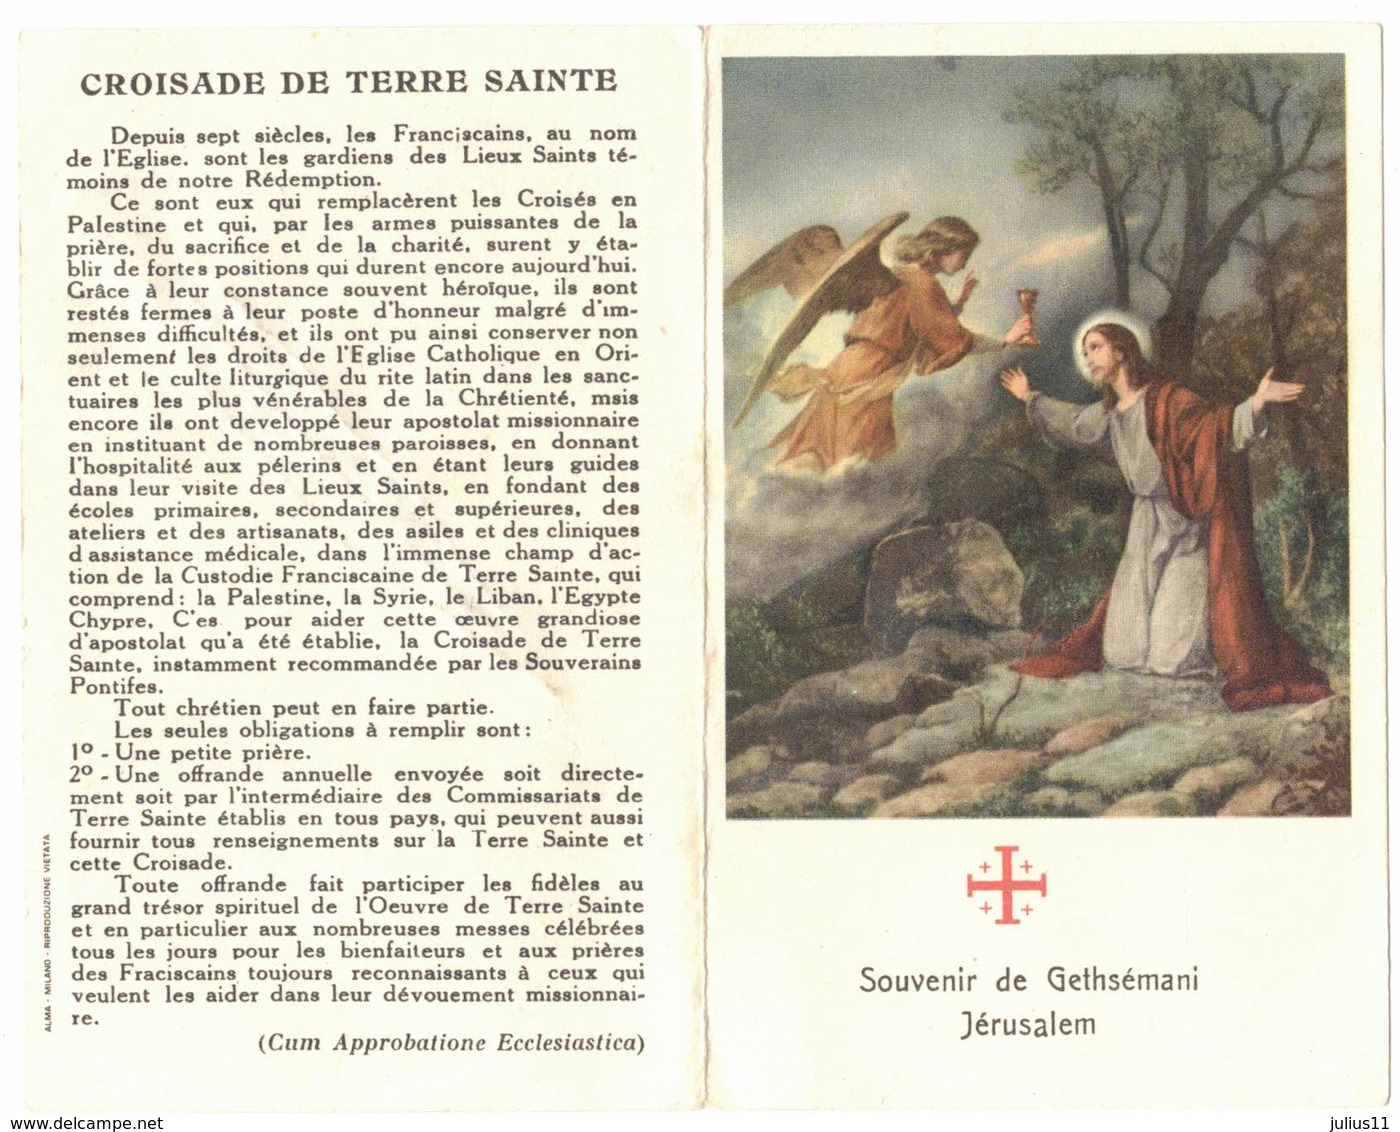 SOUVENIR GETHSEMANI JERUSAEM Double Reliquia Feuille Jardin IMAGE PIEUSE RELIGIEUSE HOLY CARD SANTINI HEILIG PRENTJE - Devotion Images